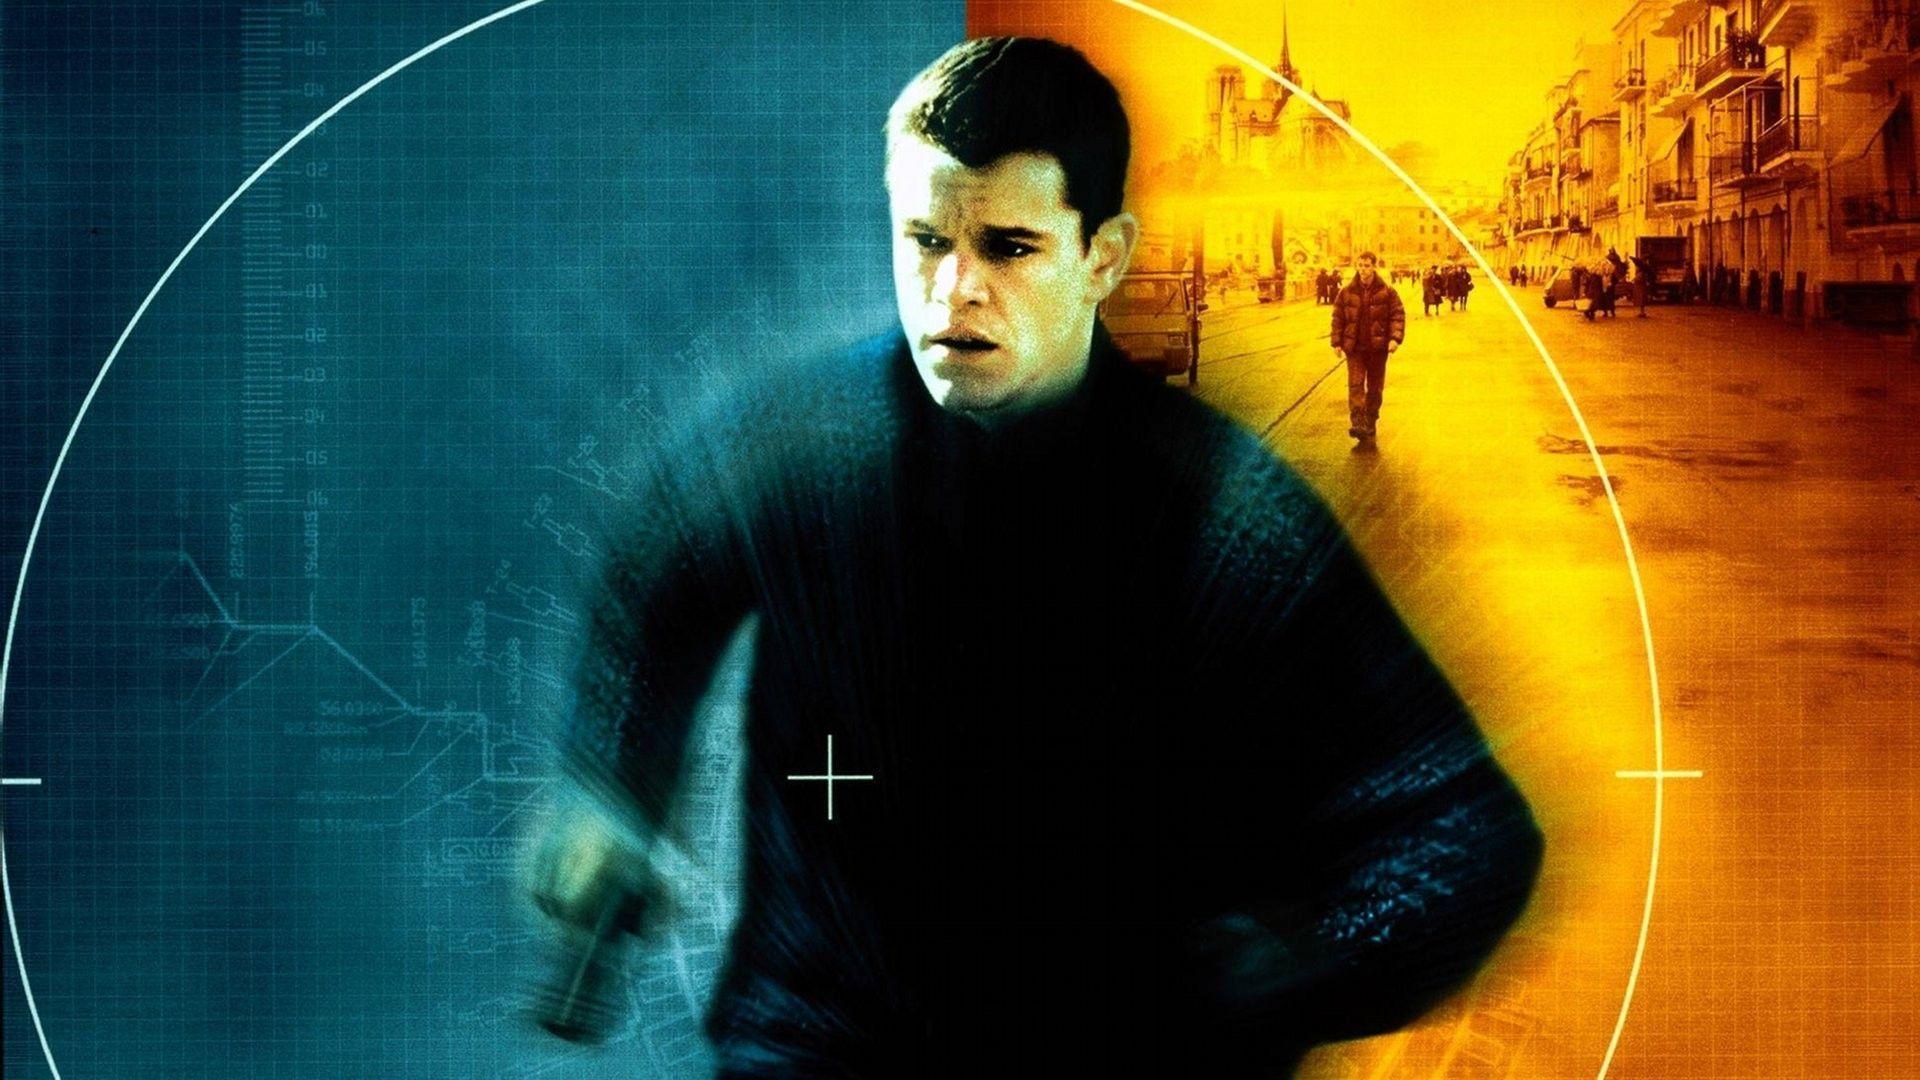 Bourne Identity Wallpaper